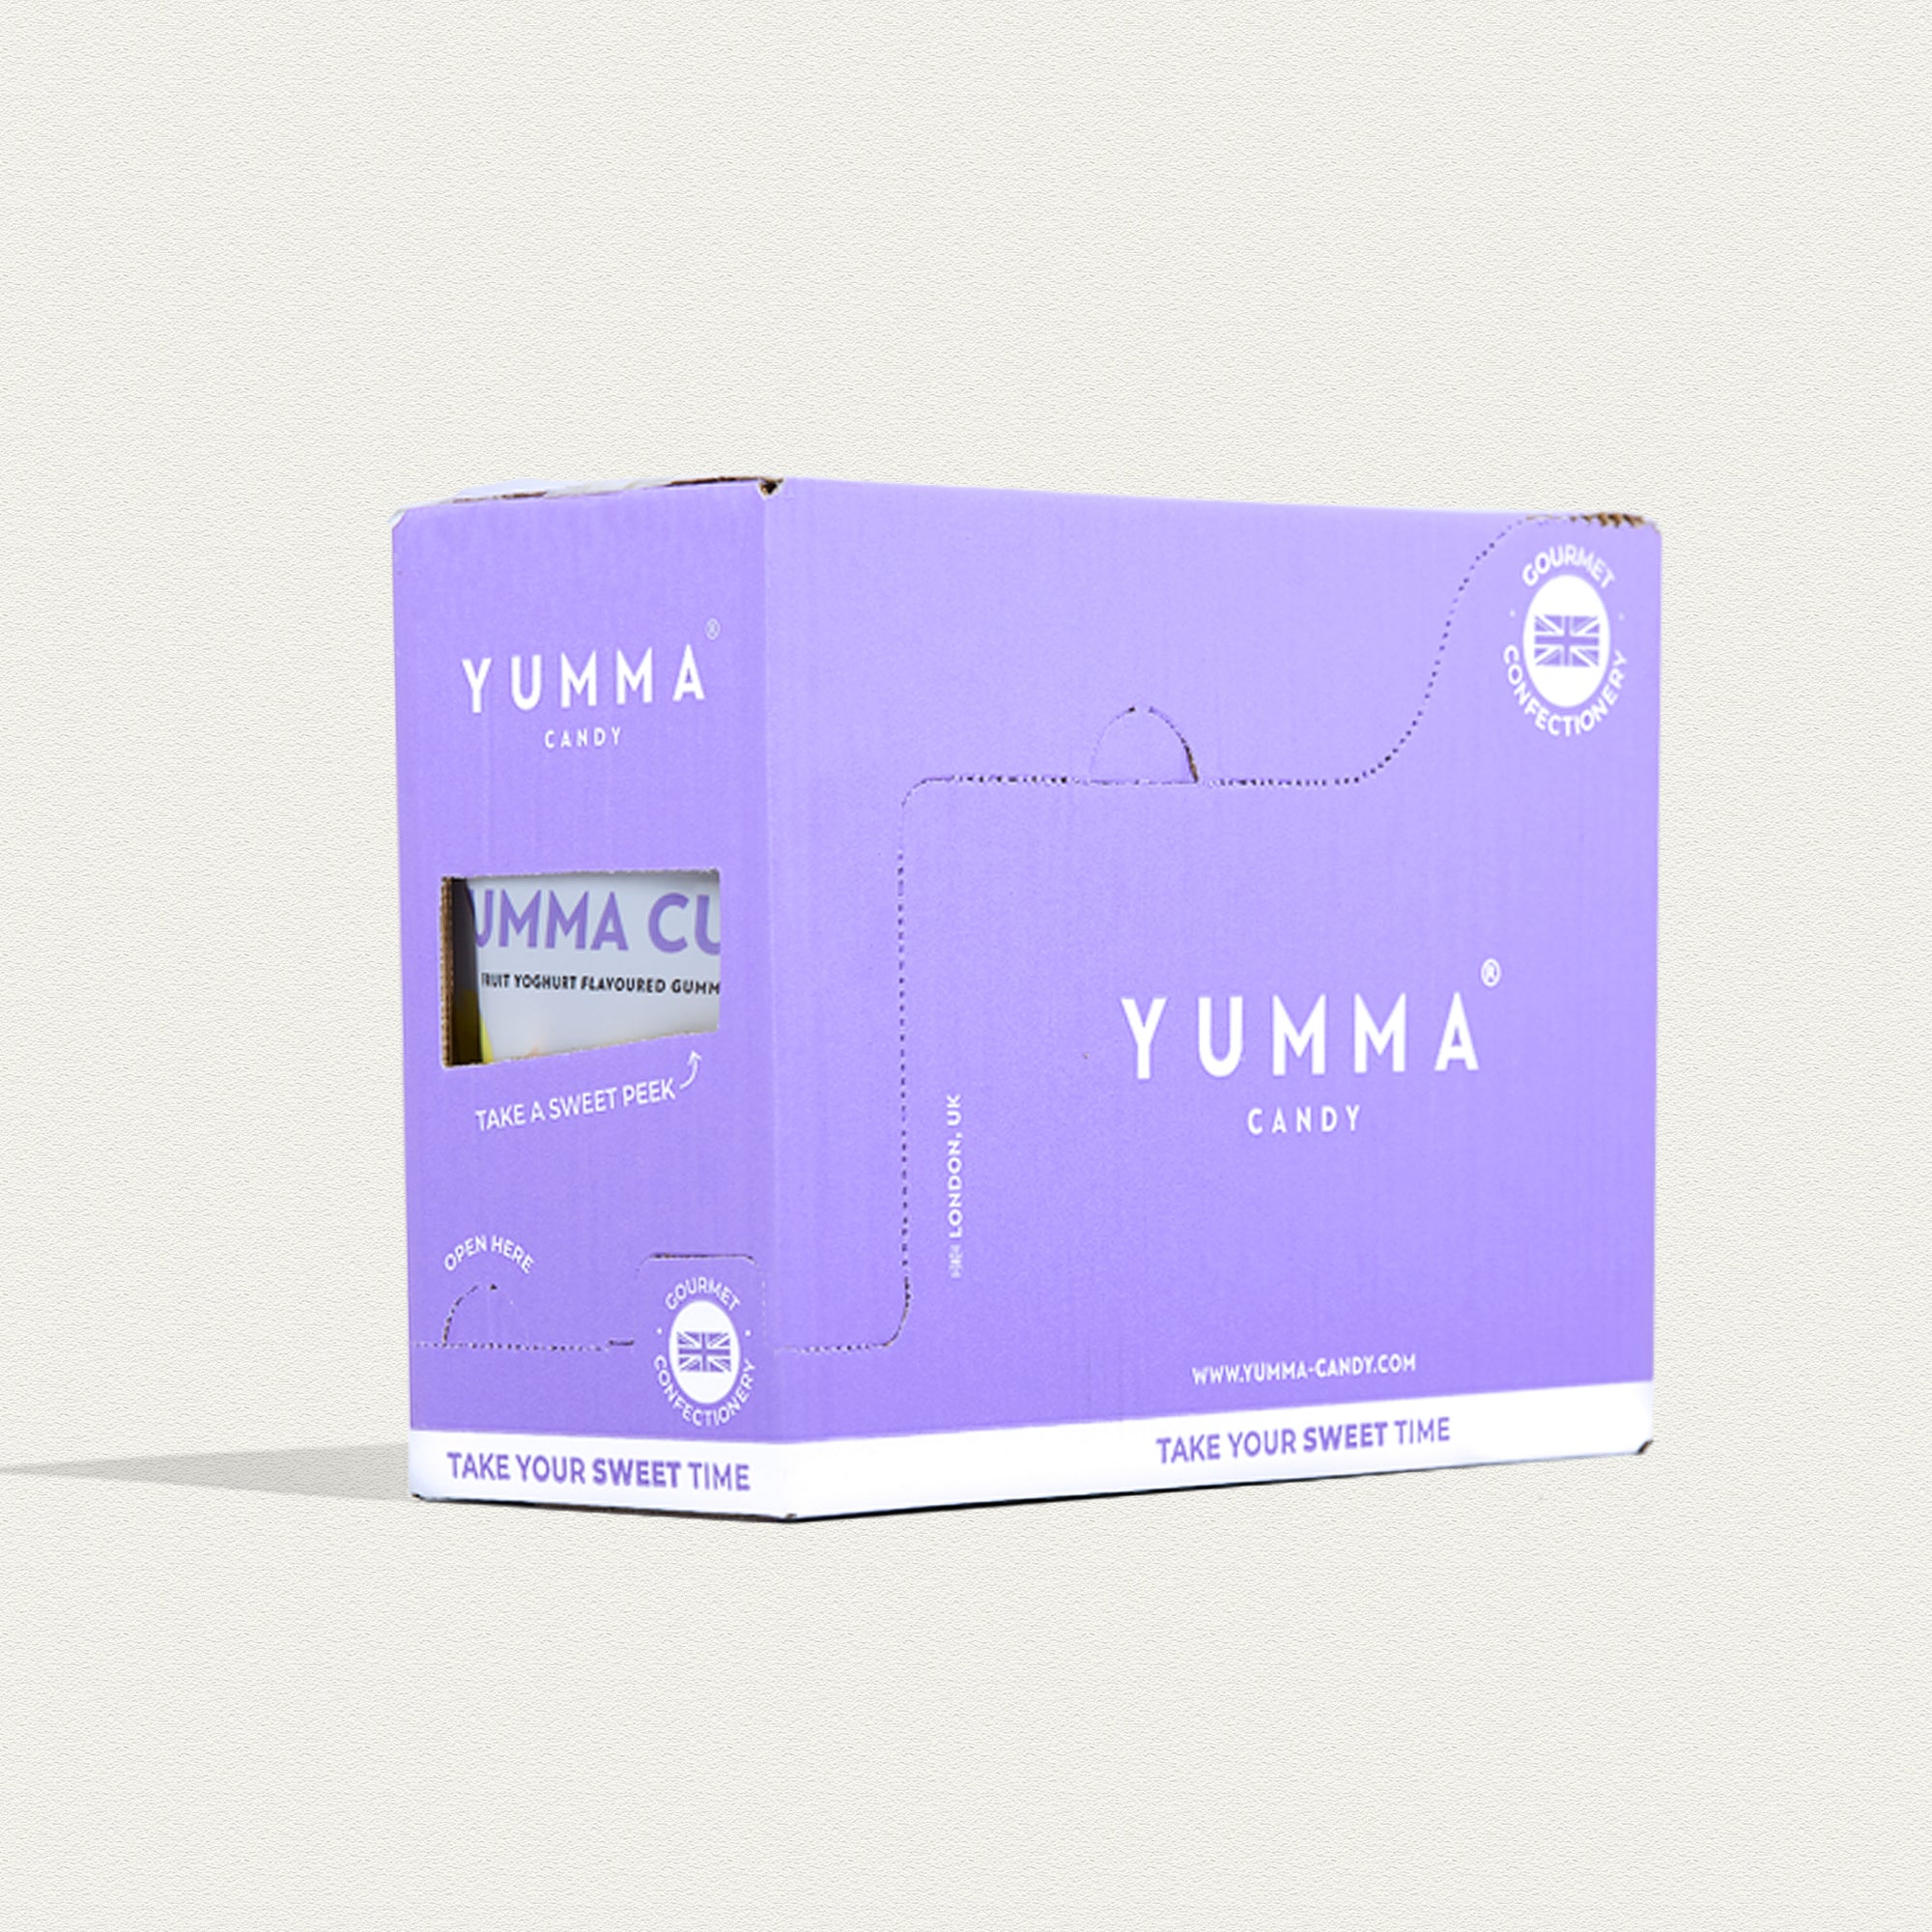 Yumma Cups Box (7 x 138g)